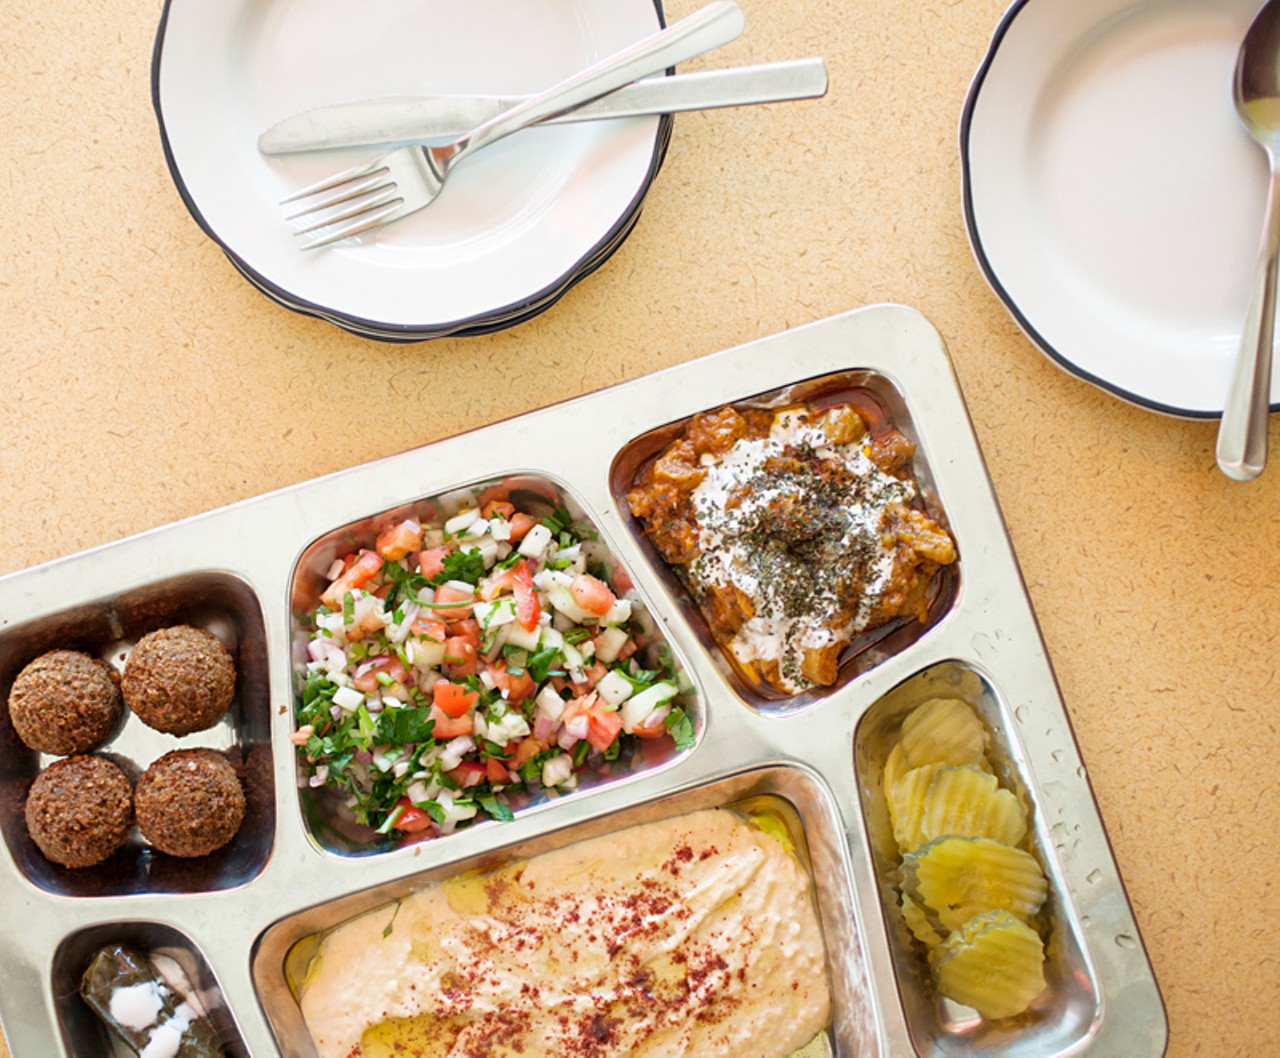 The "Mediterranean Feast" includes falafel, eggplant-stuffed grape leaves, hummus and shirazi salad.